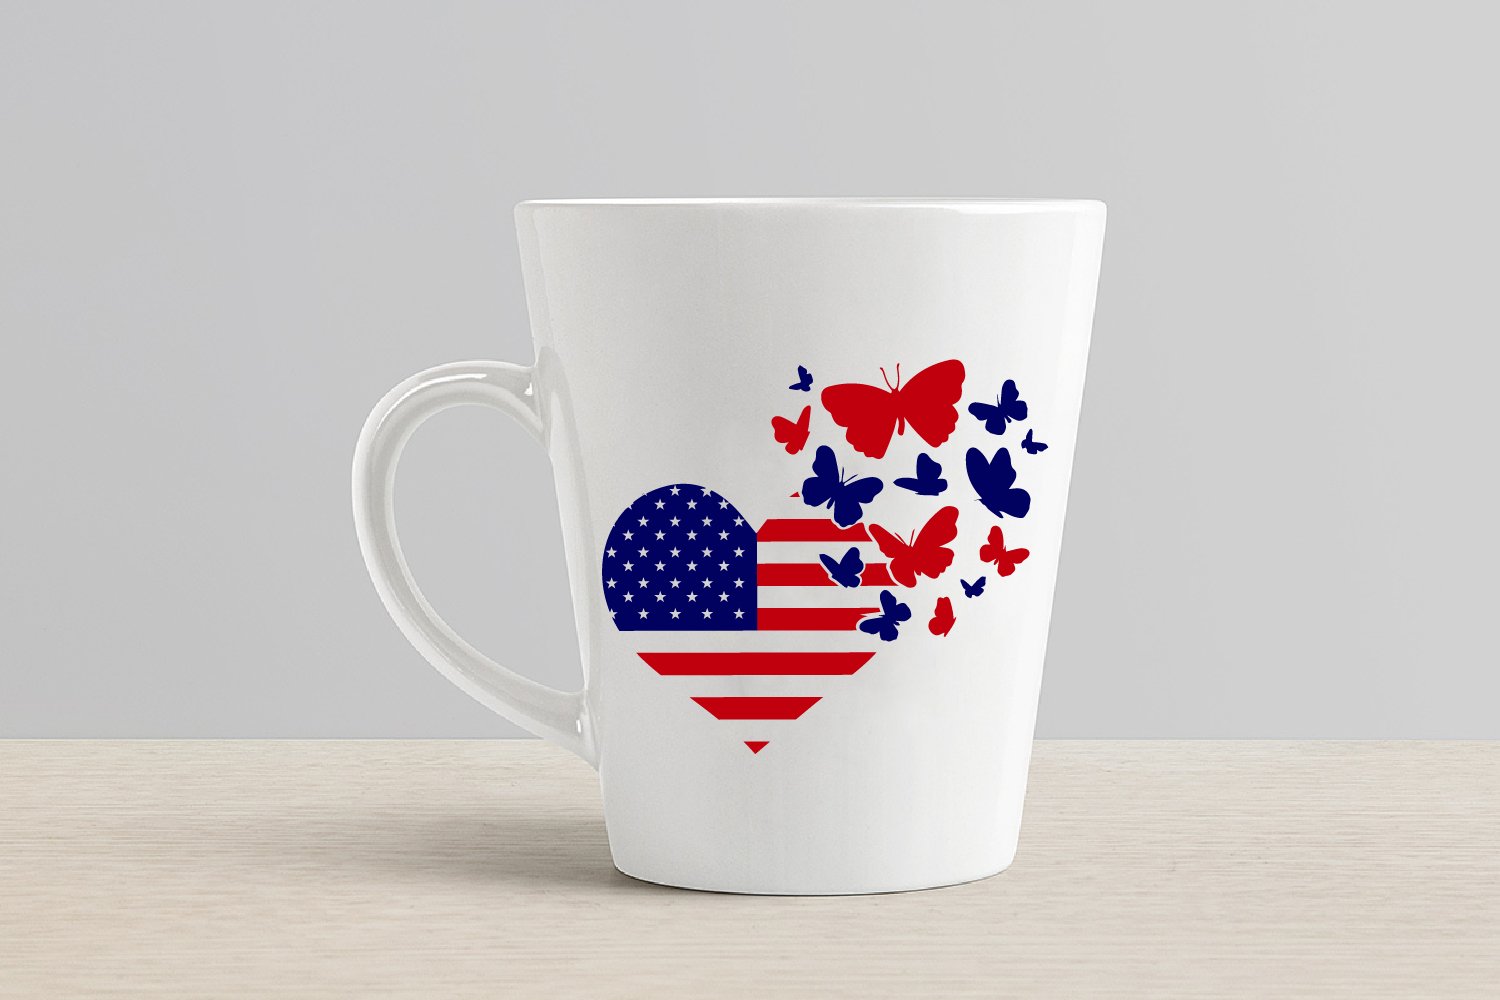 Unique patriotic print on the cup.